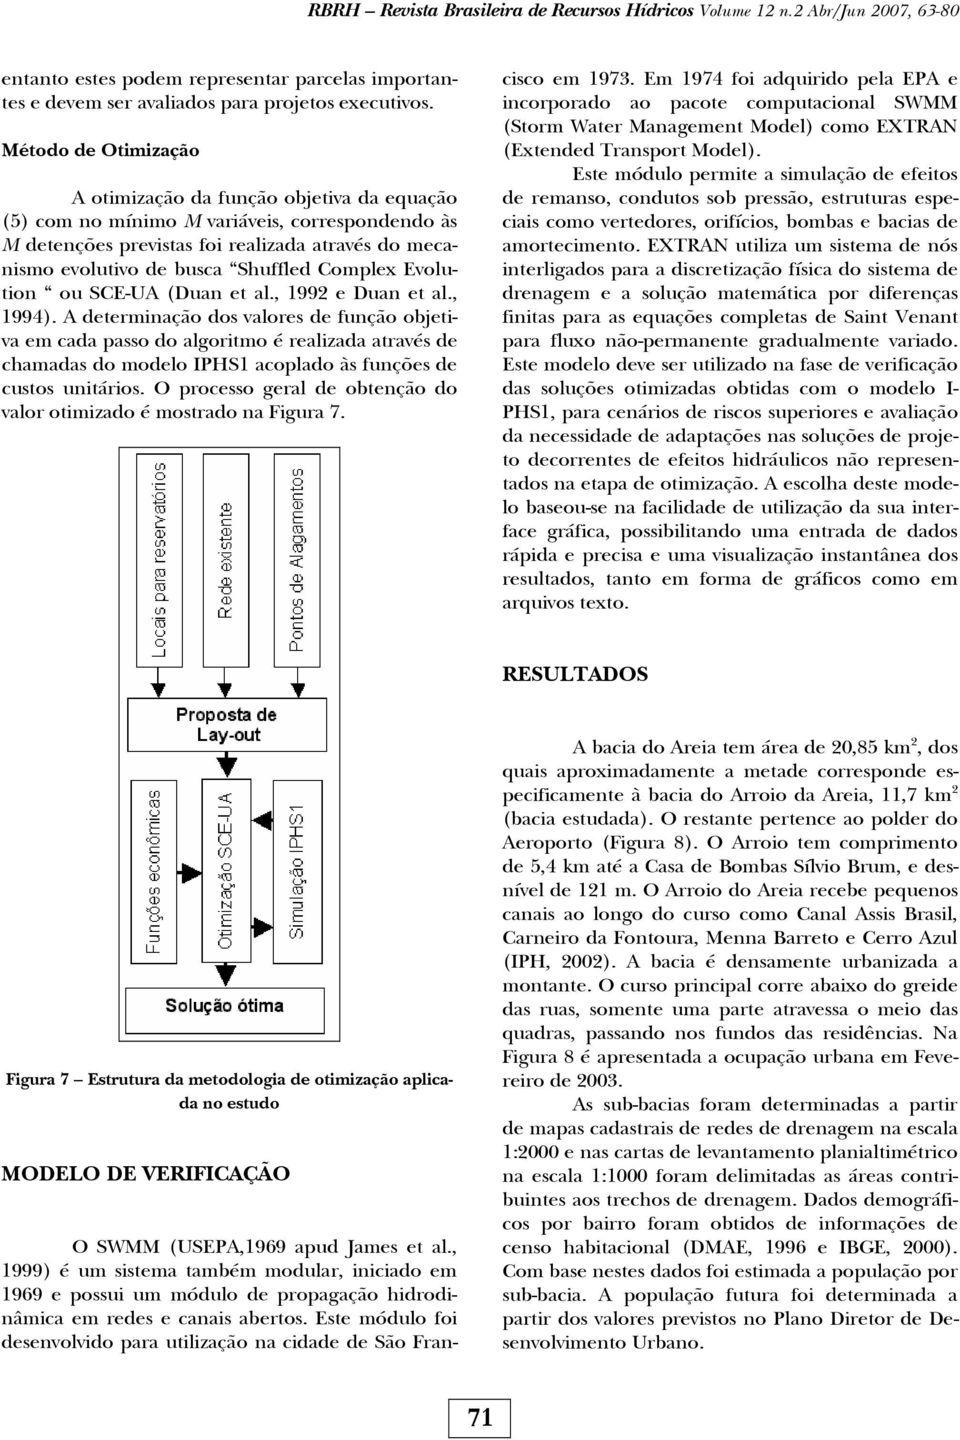 Complex Evolution ou SCE-UA (Duan et al., 1992 e Duan et al., 1994).